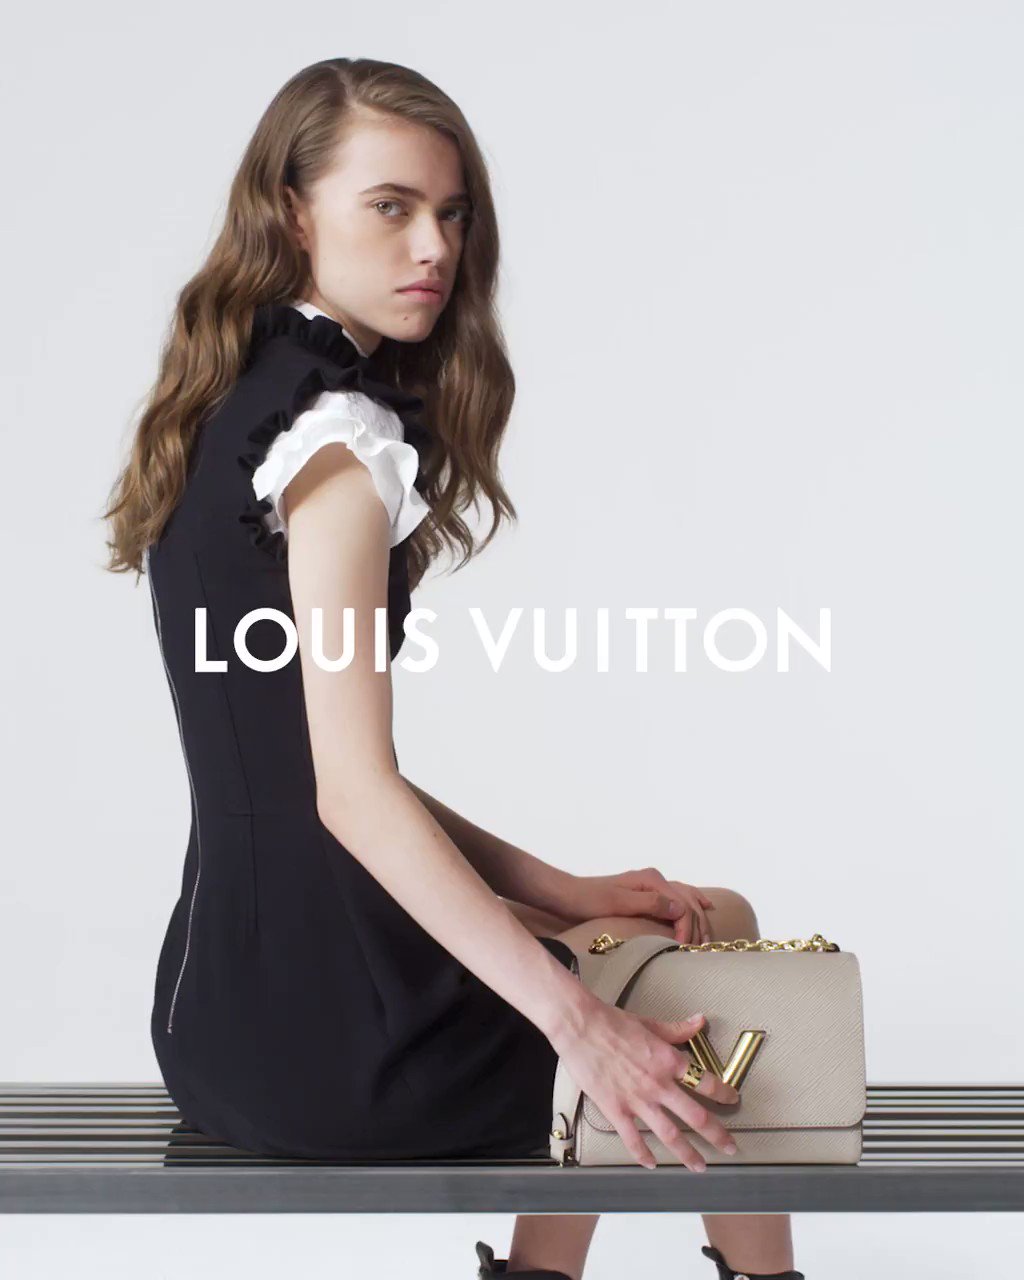 Louis Vuitton on X: A bold alternative. #LouisVuitton's Monogram